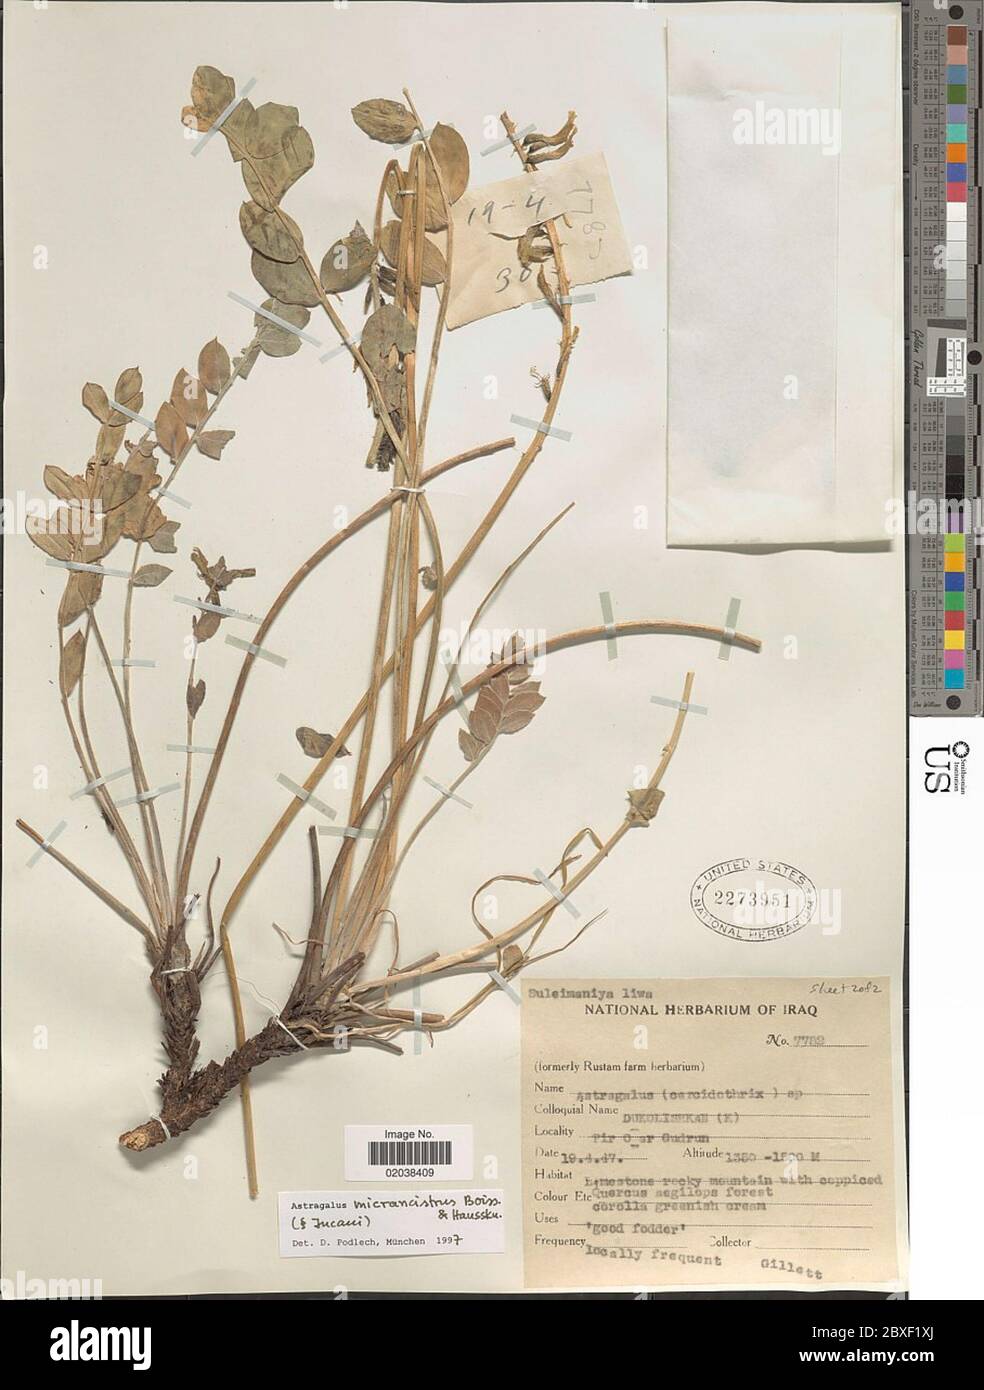 Astragalus micrancistrus Boiss Hausskn Astragalus micrancistrus Boiss Hausskn. Stock Photo